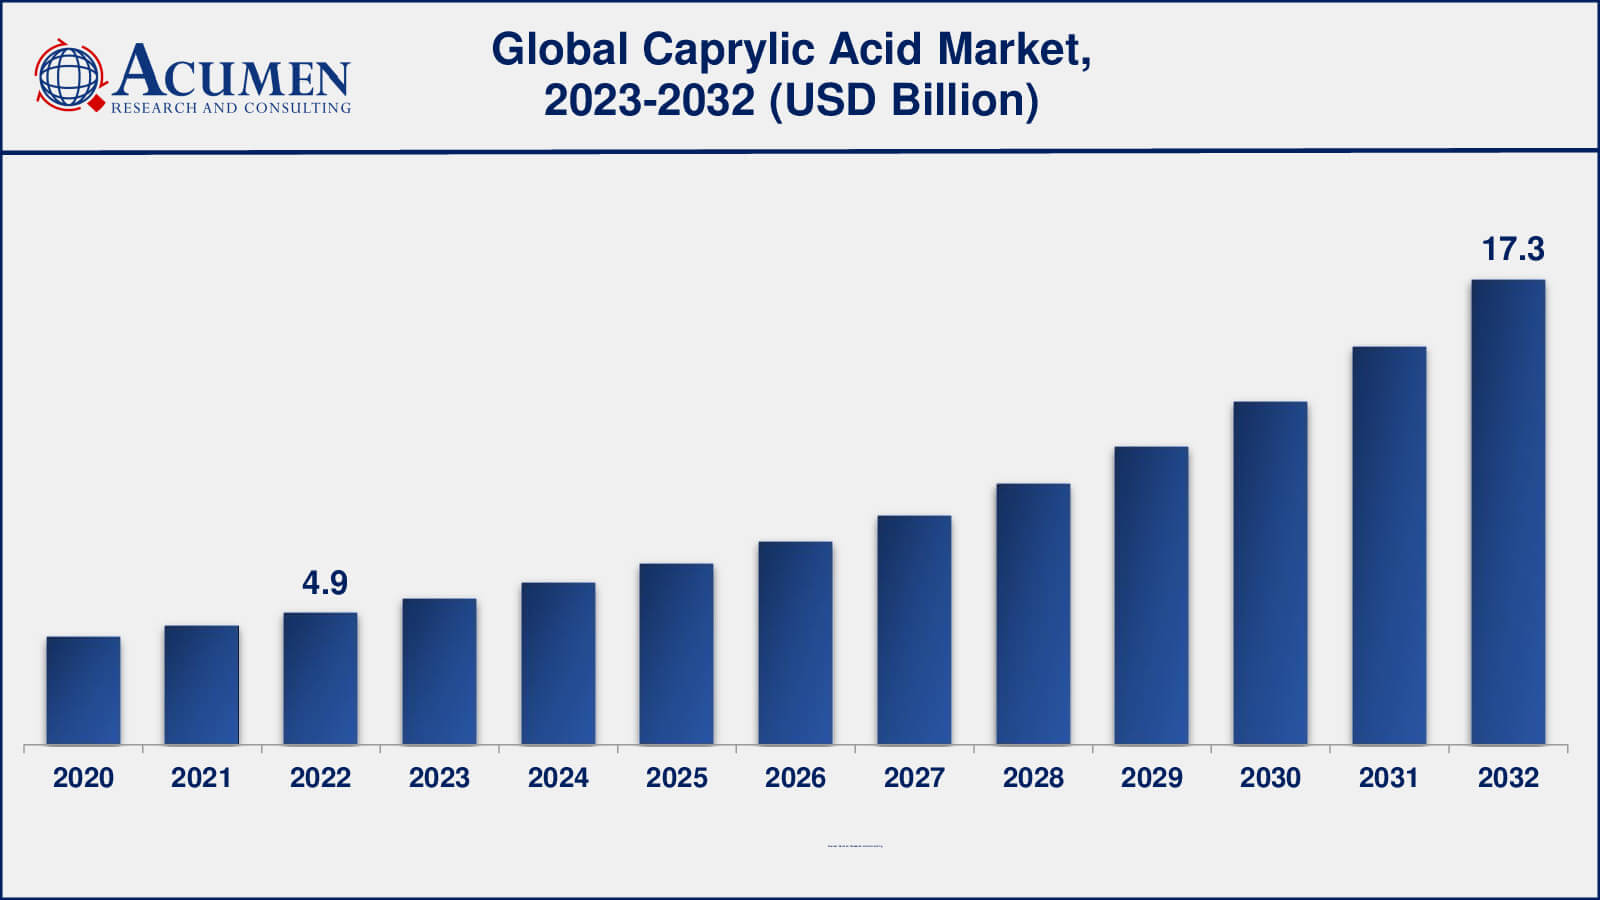 Caprylic Acid Market Analysis Period